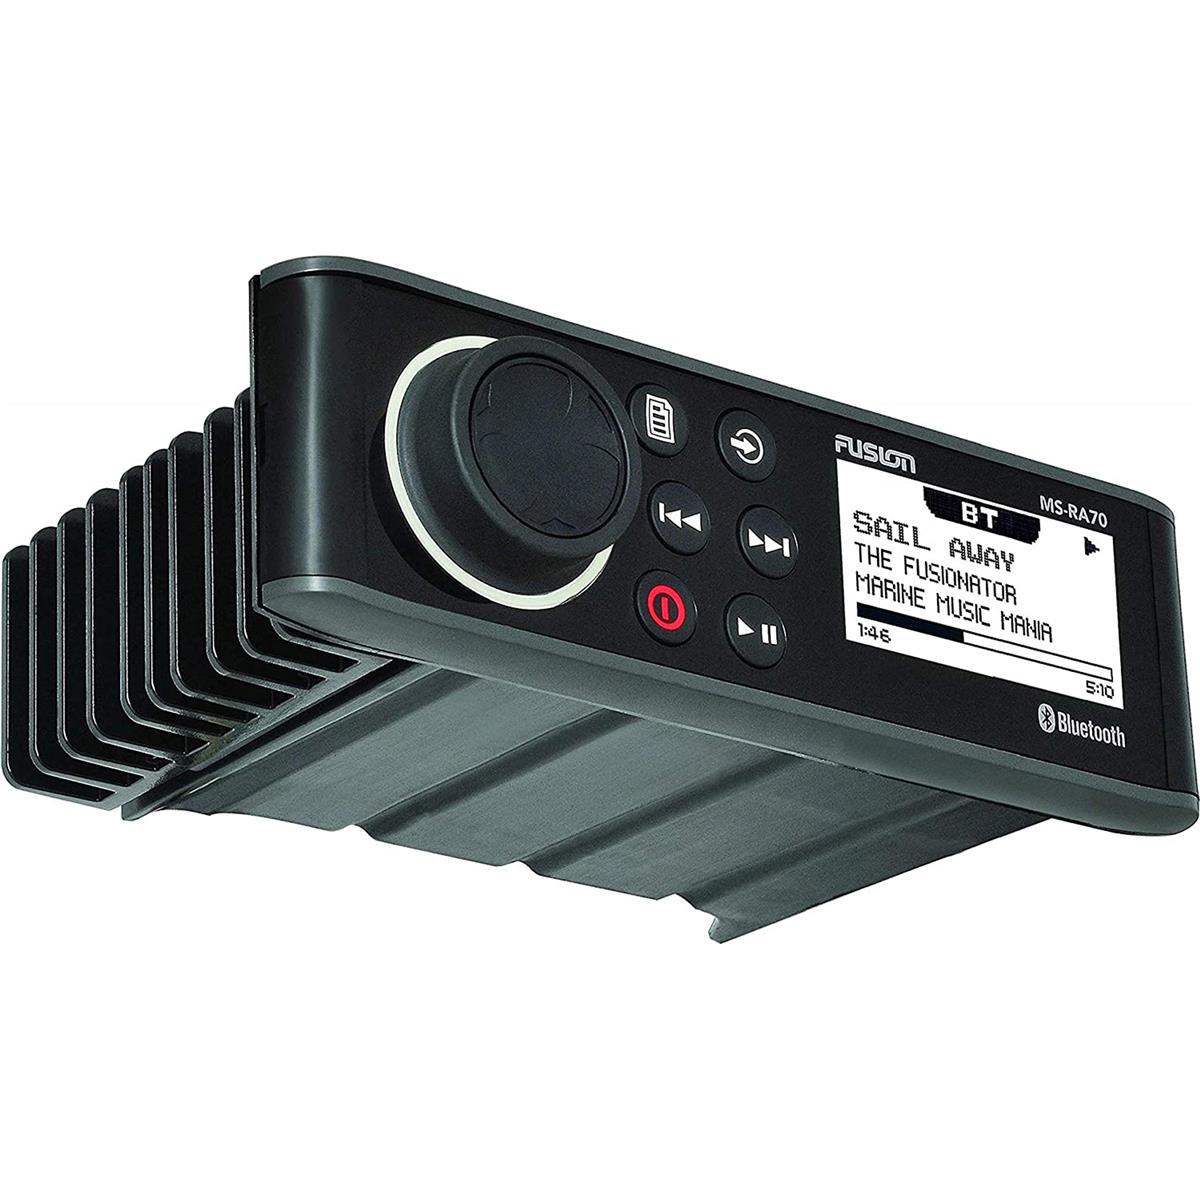 Image of Garmin Fusion MS-RA70 Monochrome LCD Marine Stereo with Bluetooth